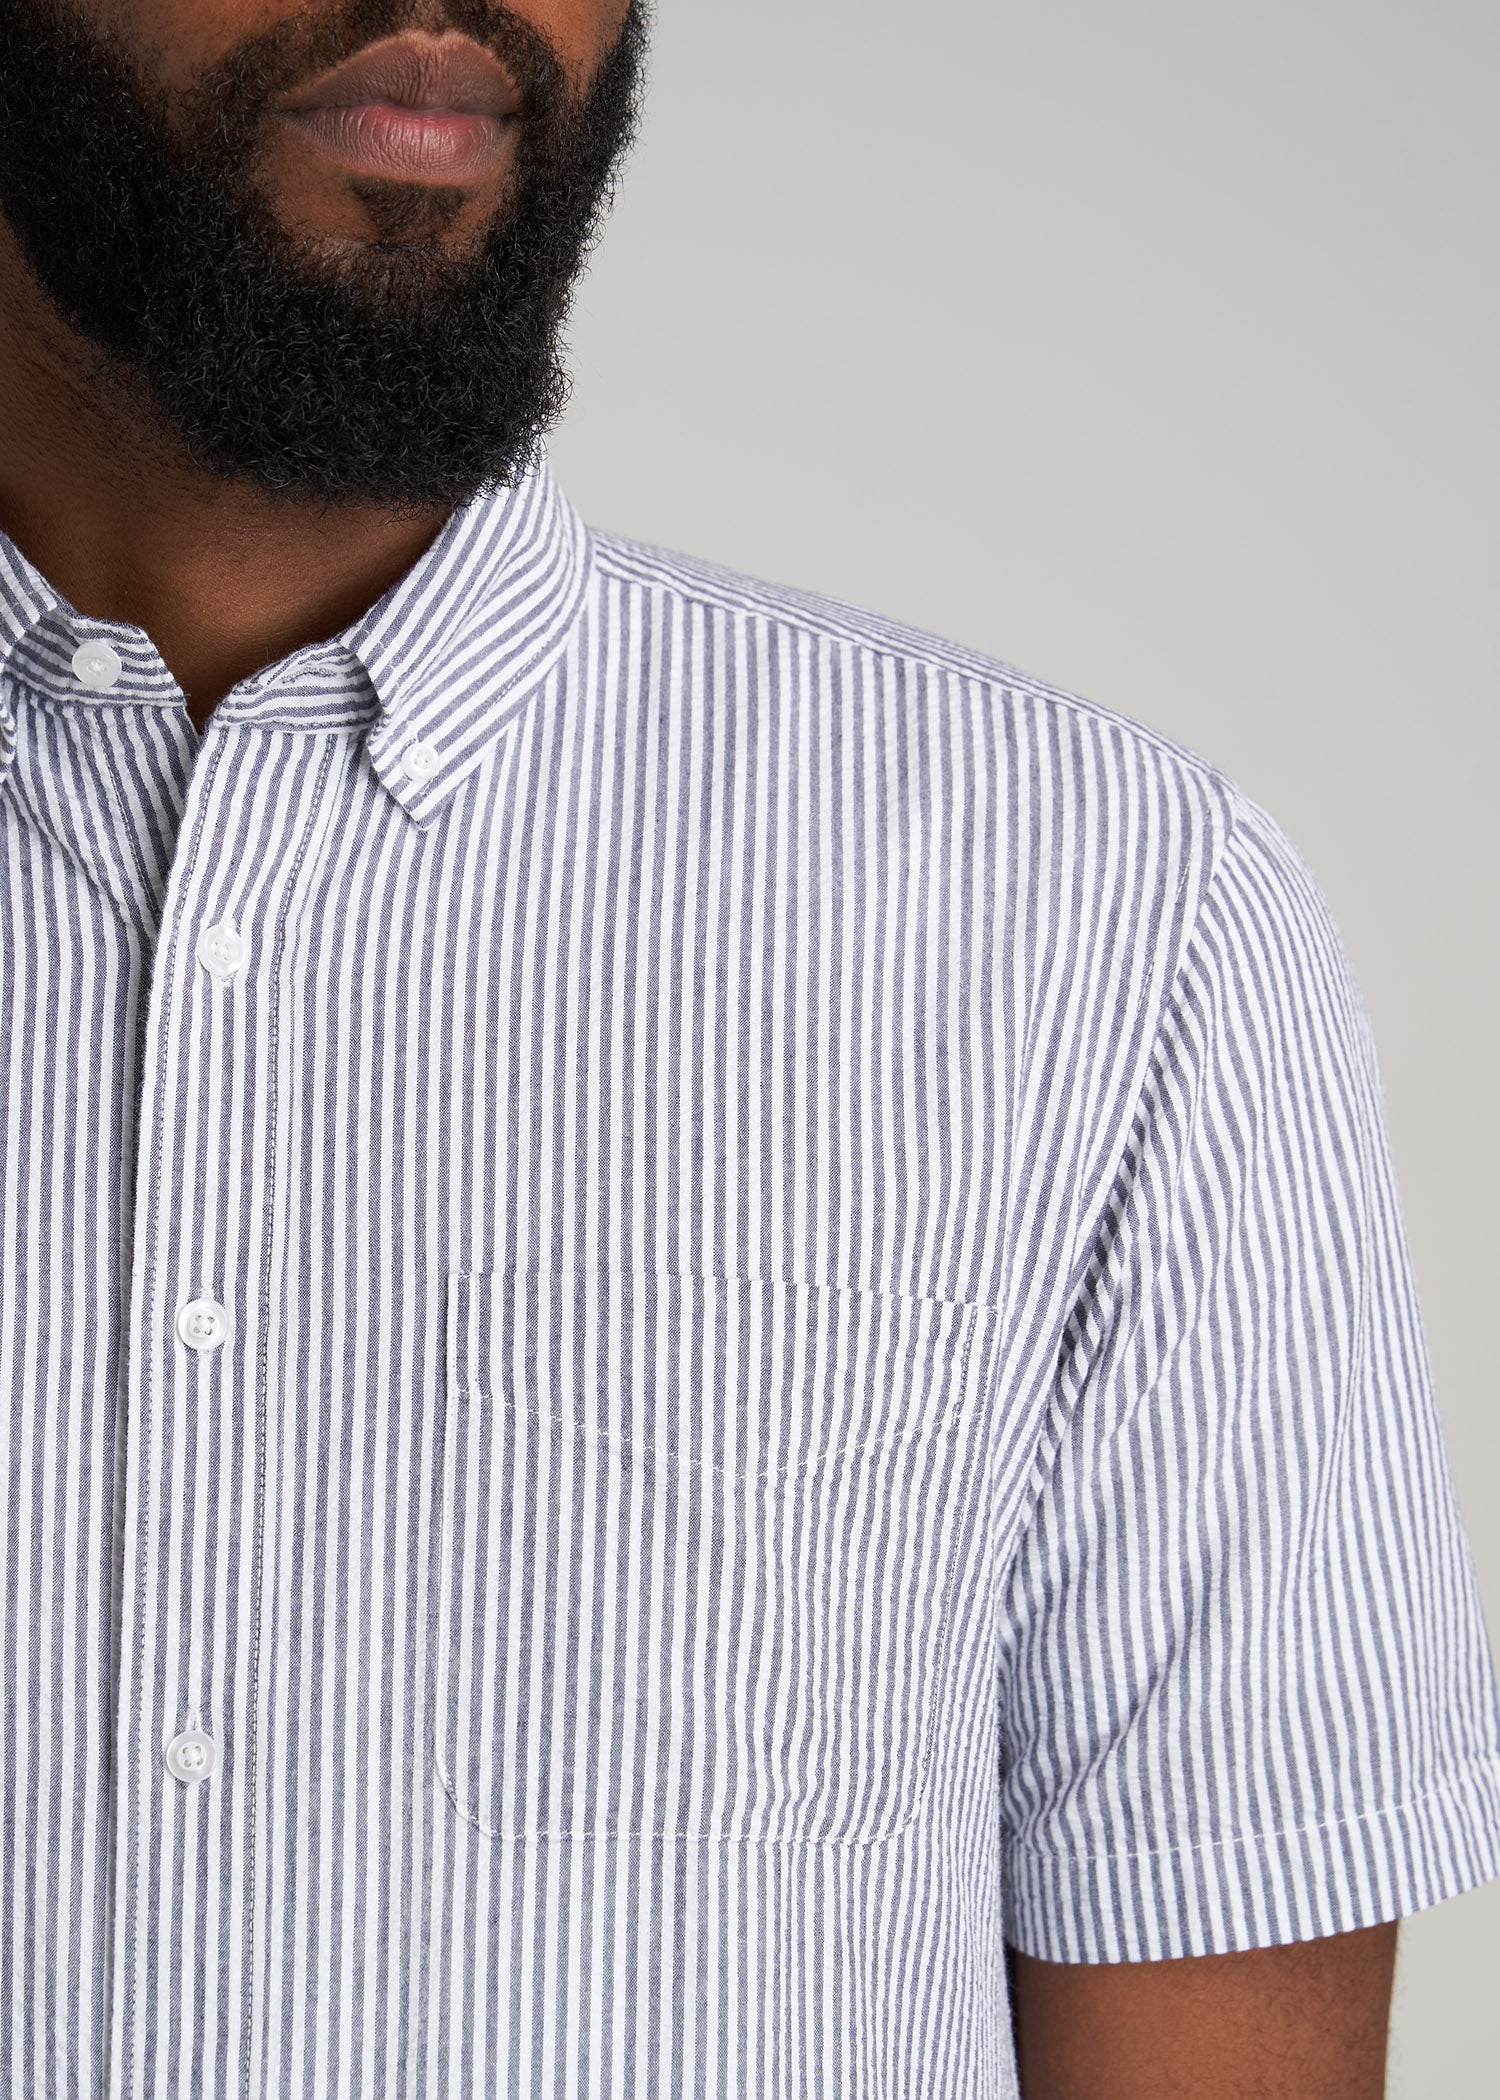 Seersucker Tall Men Short Sleeve Shirt Grey White Stripe – American Tall